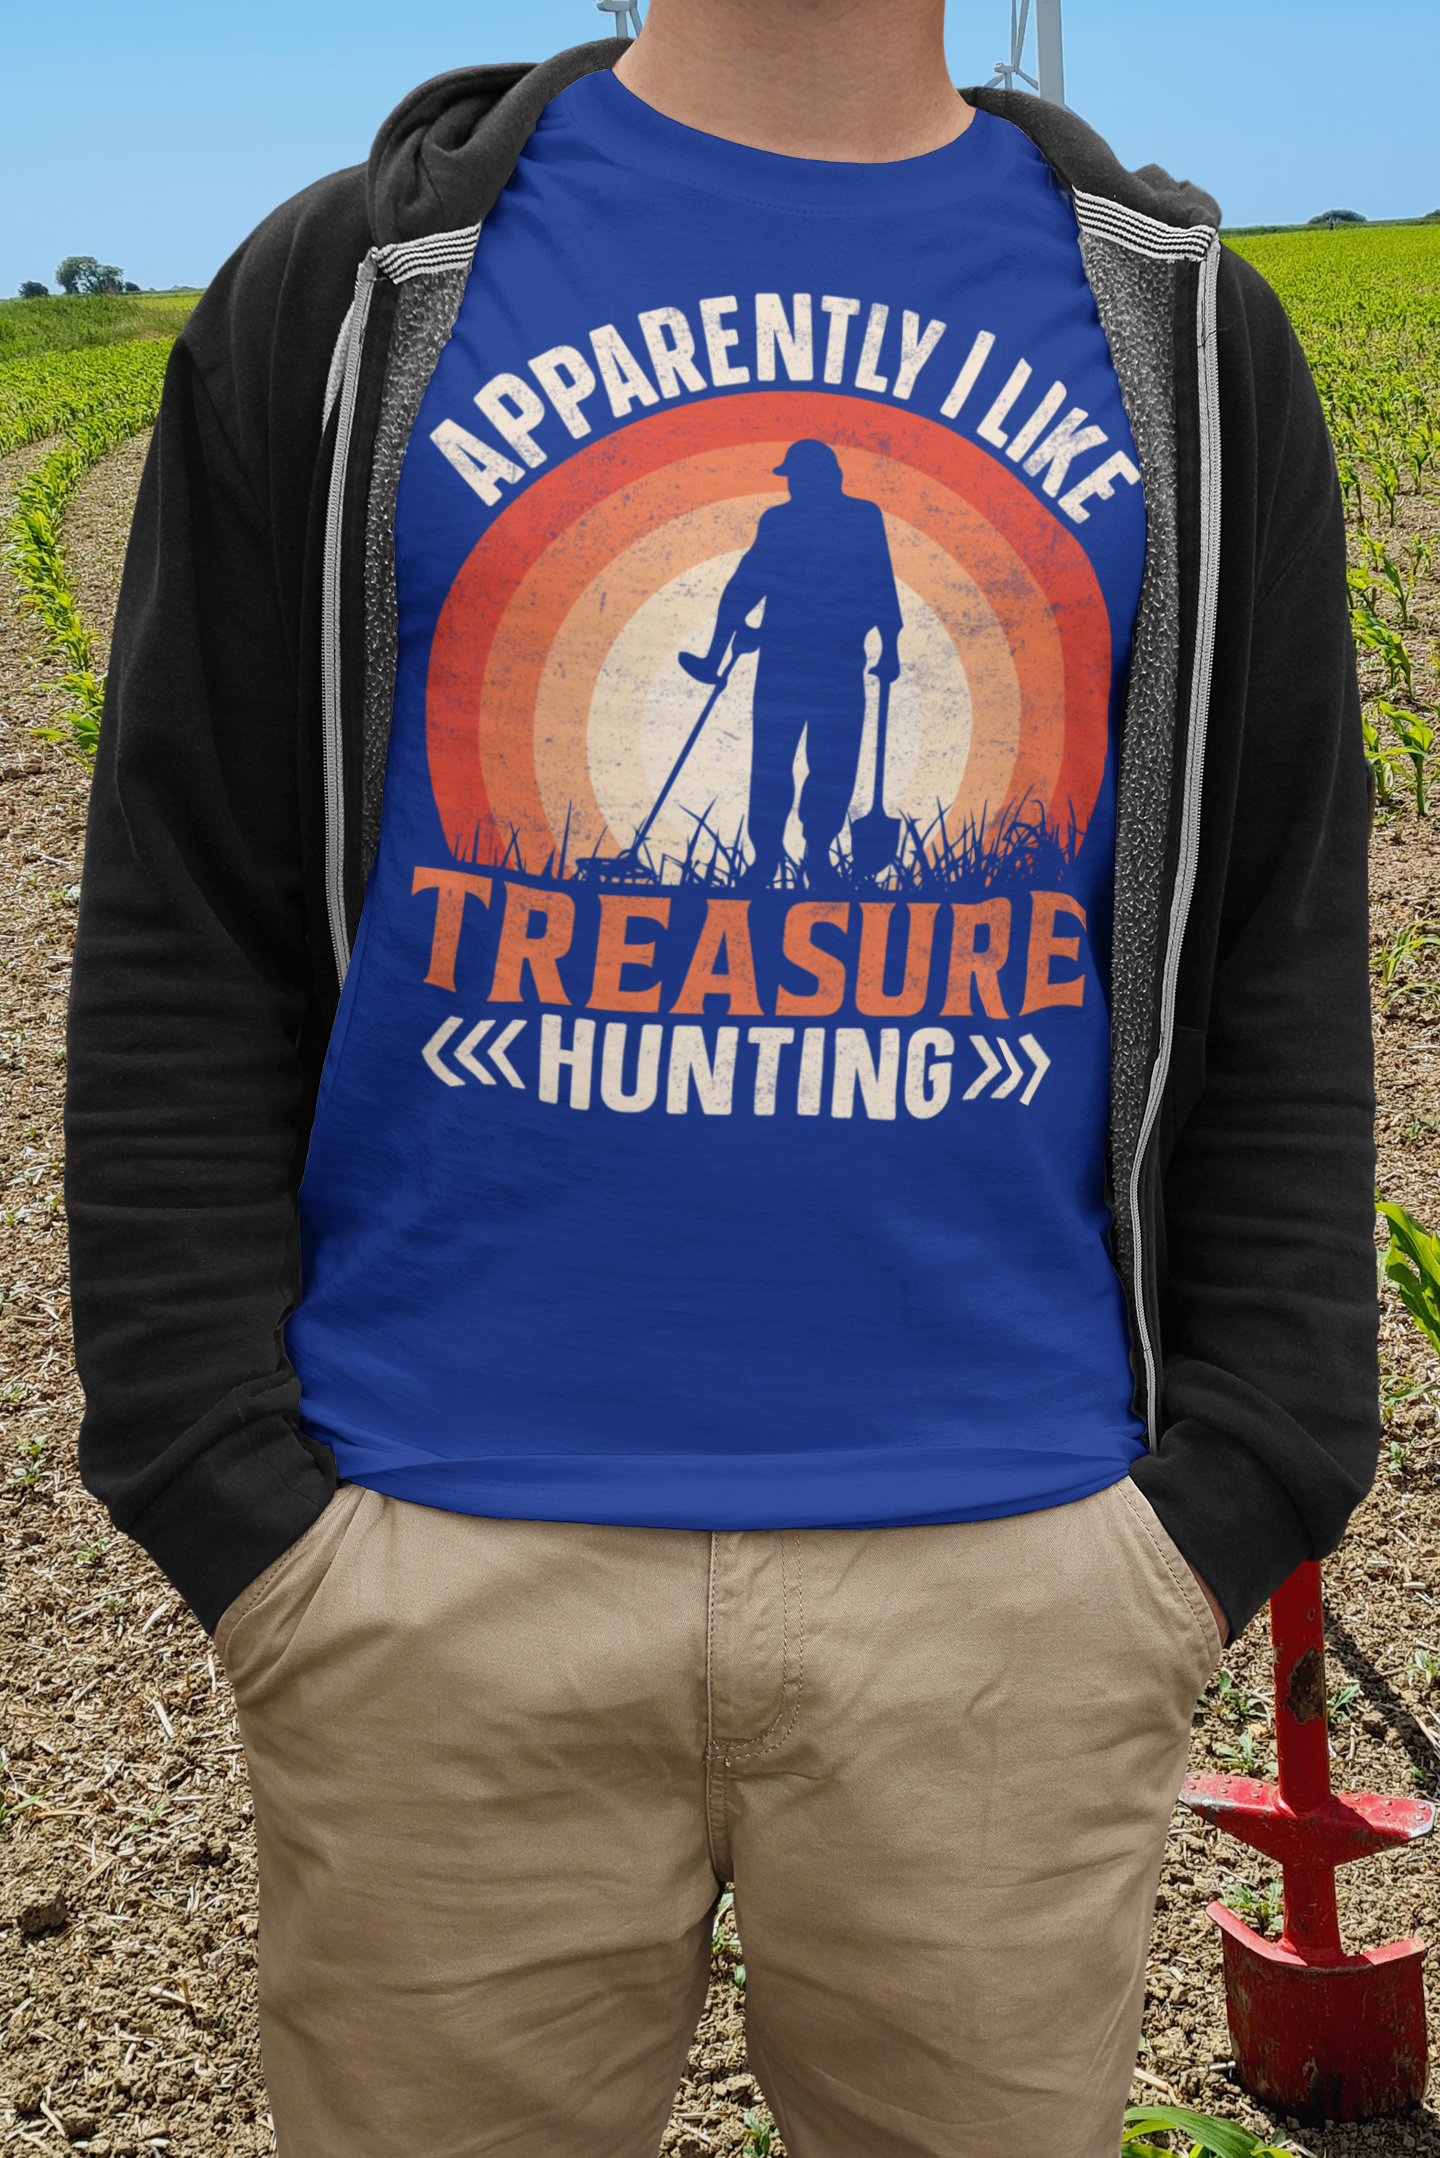 Apparently, I like treasure hunting